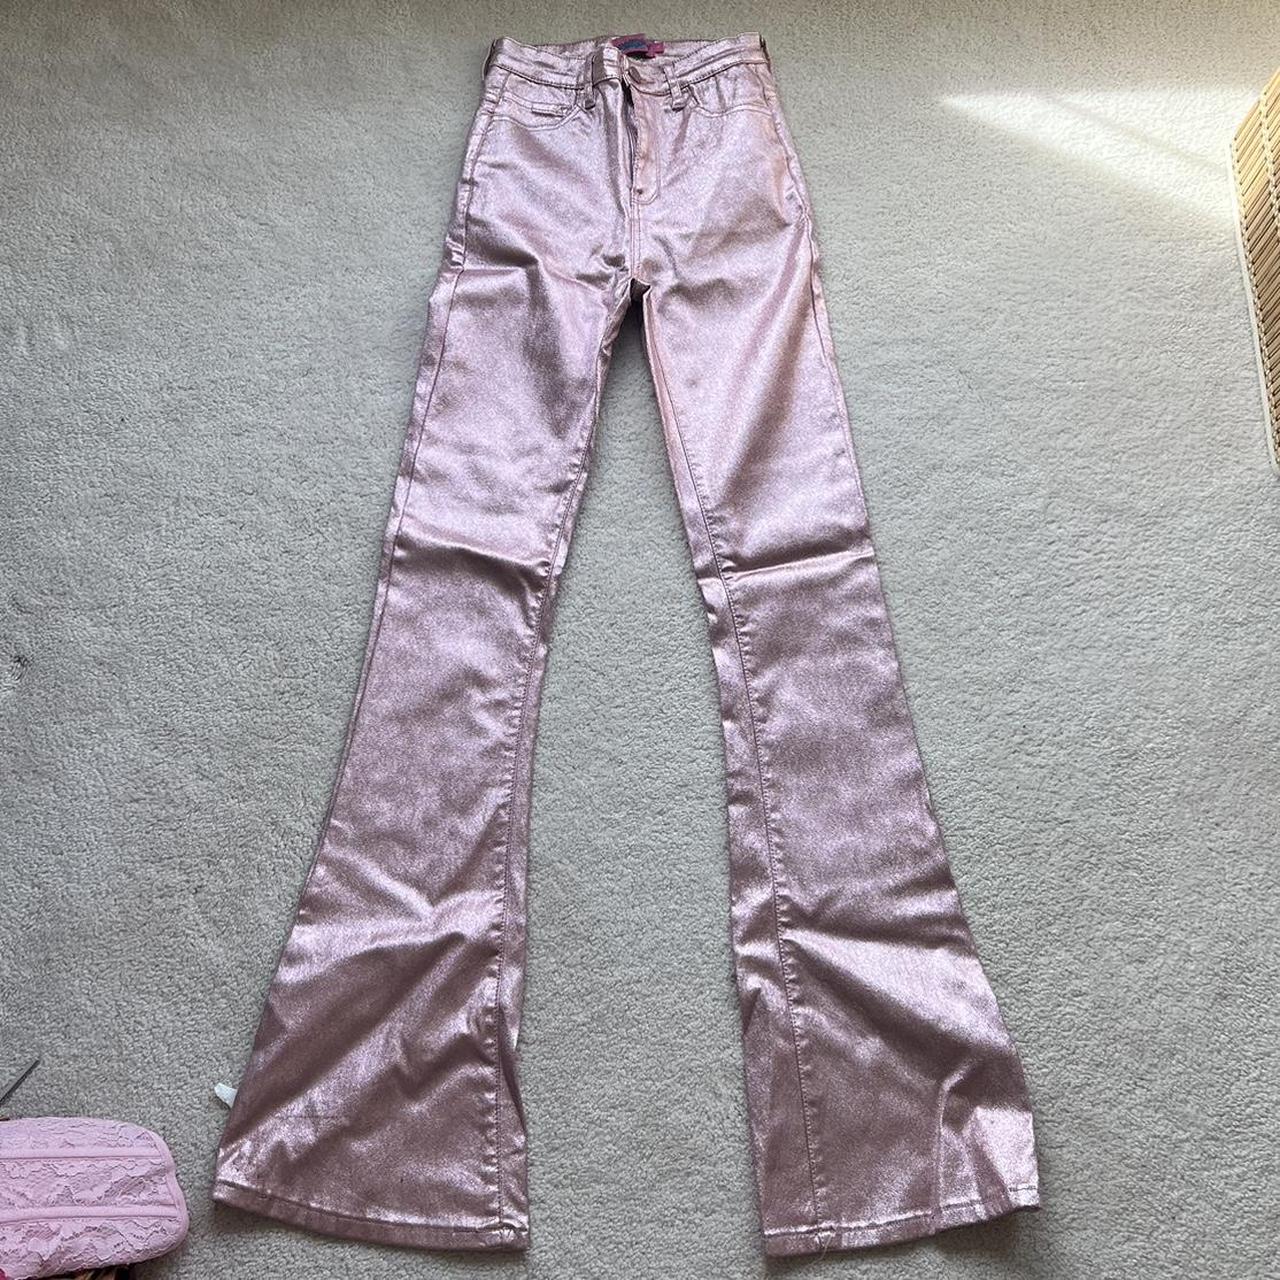 Edikted Metallic Pink Flare Pants Size Small Worn Once - Depop